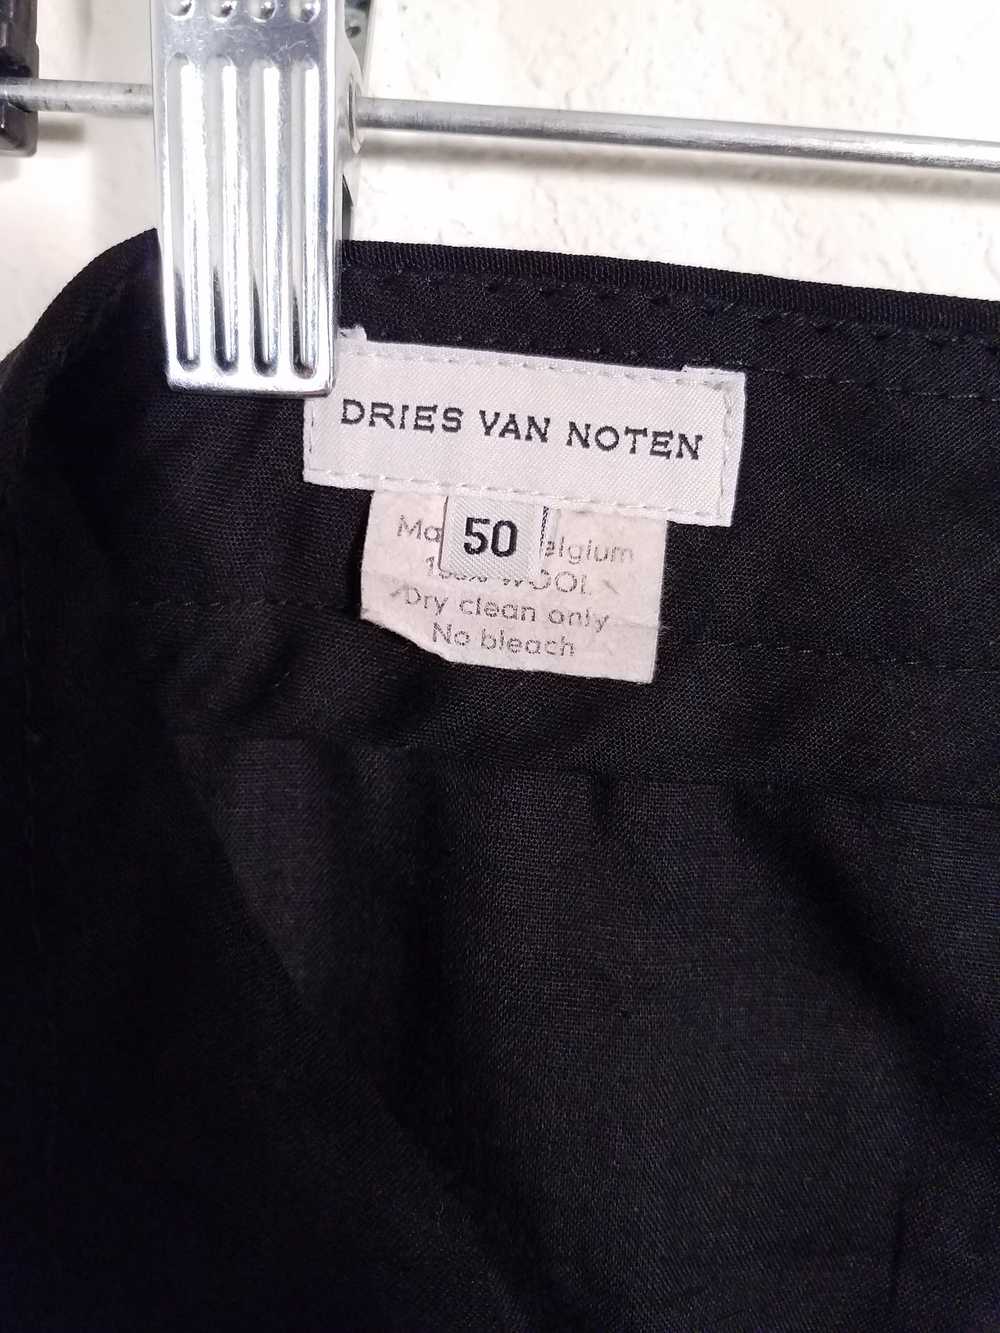 Dries Van Noten Black Pleated Dress Pants - image 4